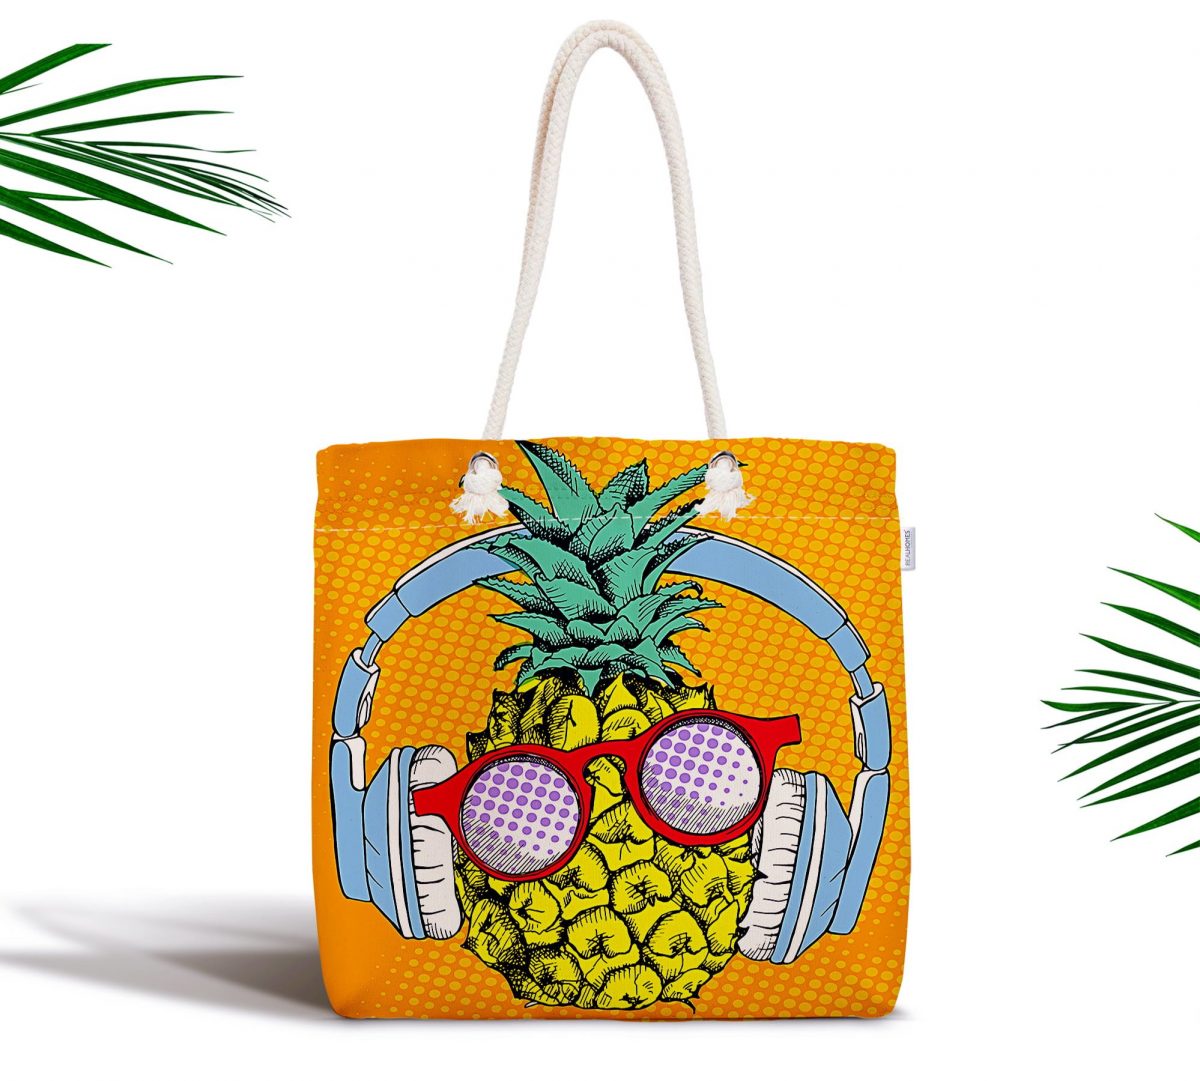 Turuncu Zeminde Summer Ananas Tasarımlı Fermuarlı Kumaş Çanta Realhomes